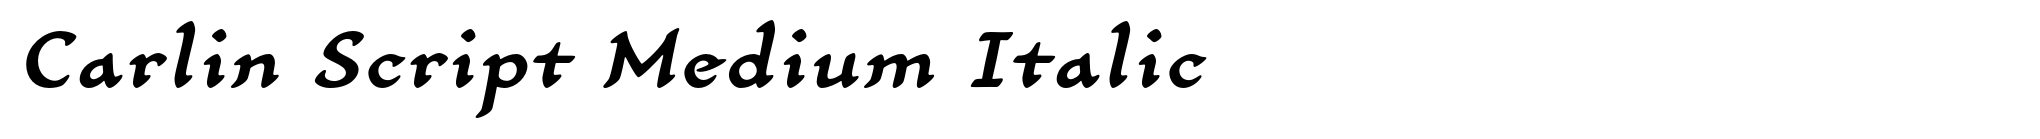 Carlin Script Medium Italic image